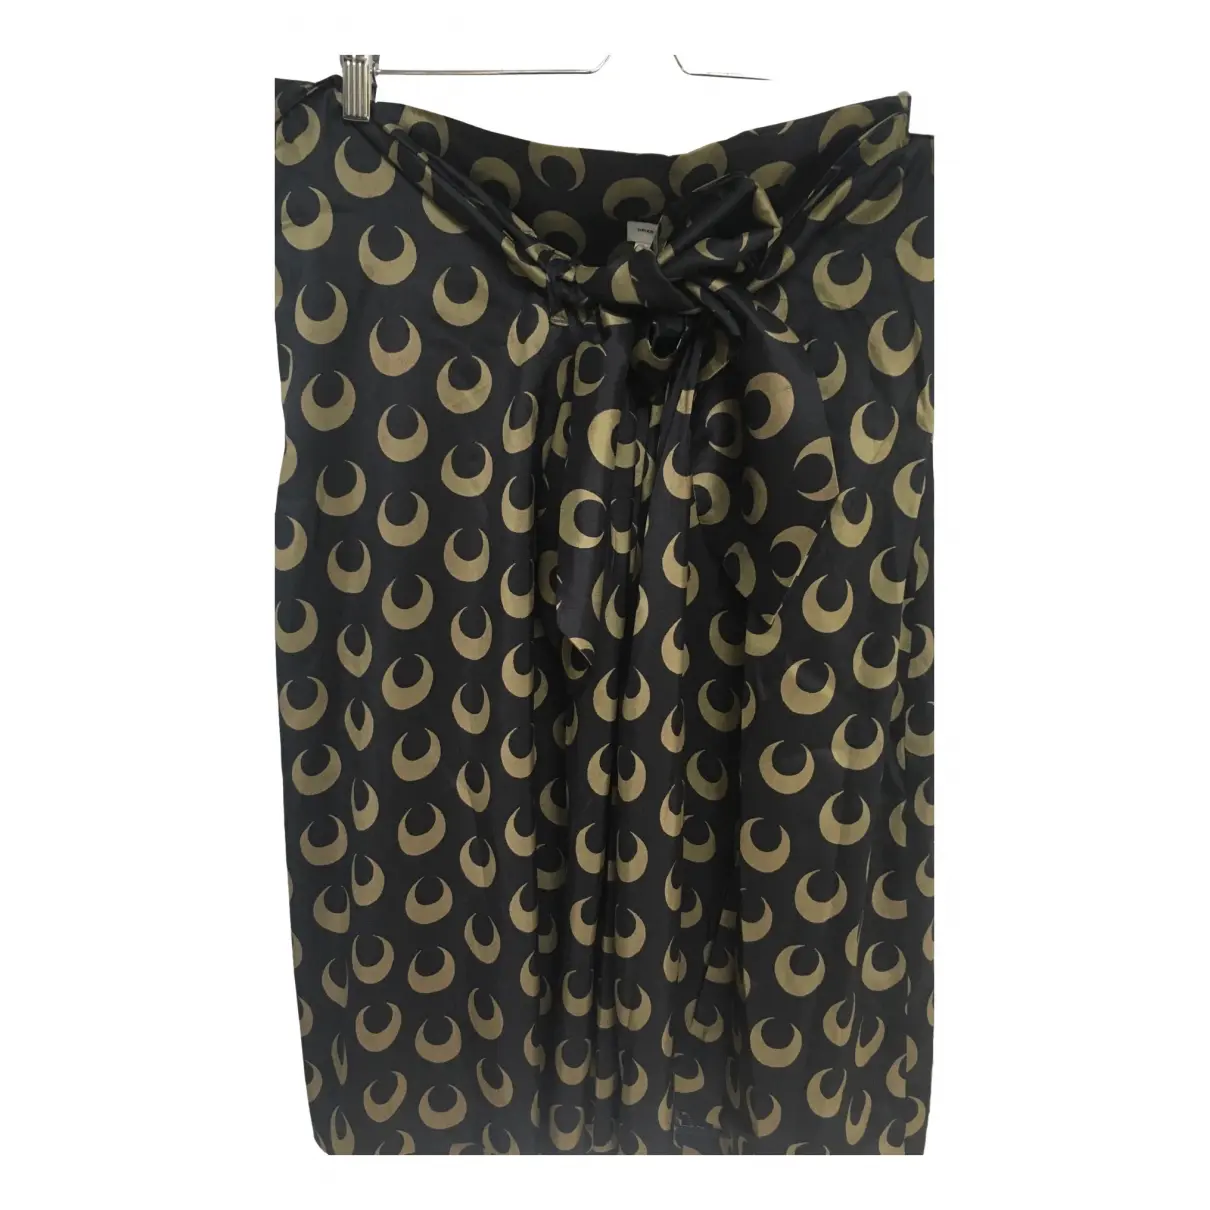 Buy Dries Van Noten Silk mid-length skirt online - Vintage